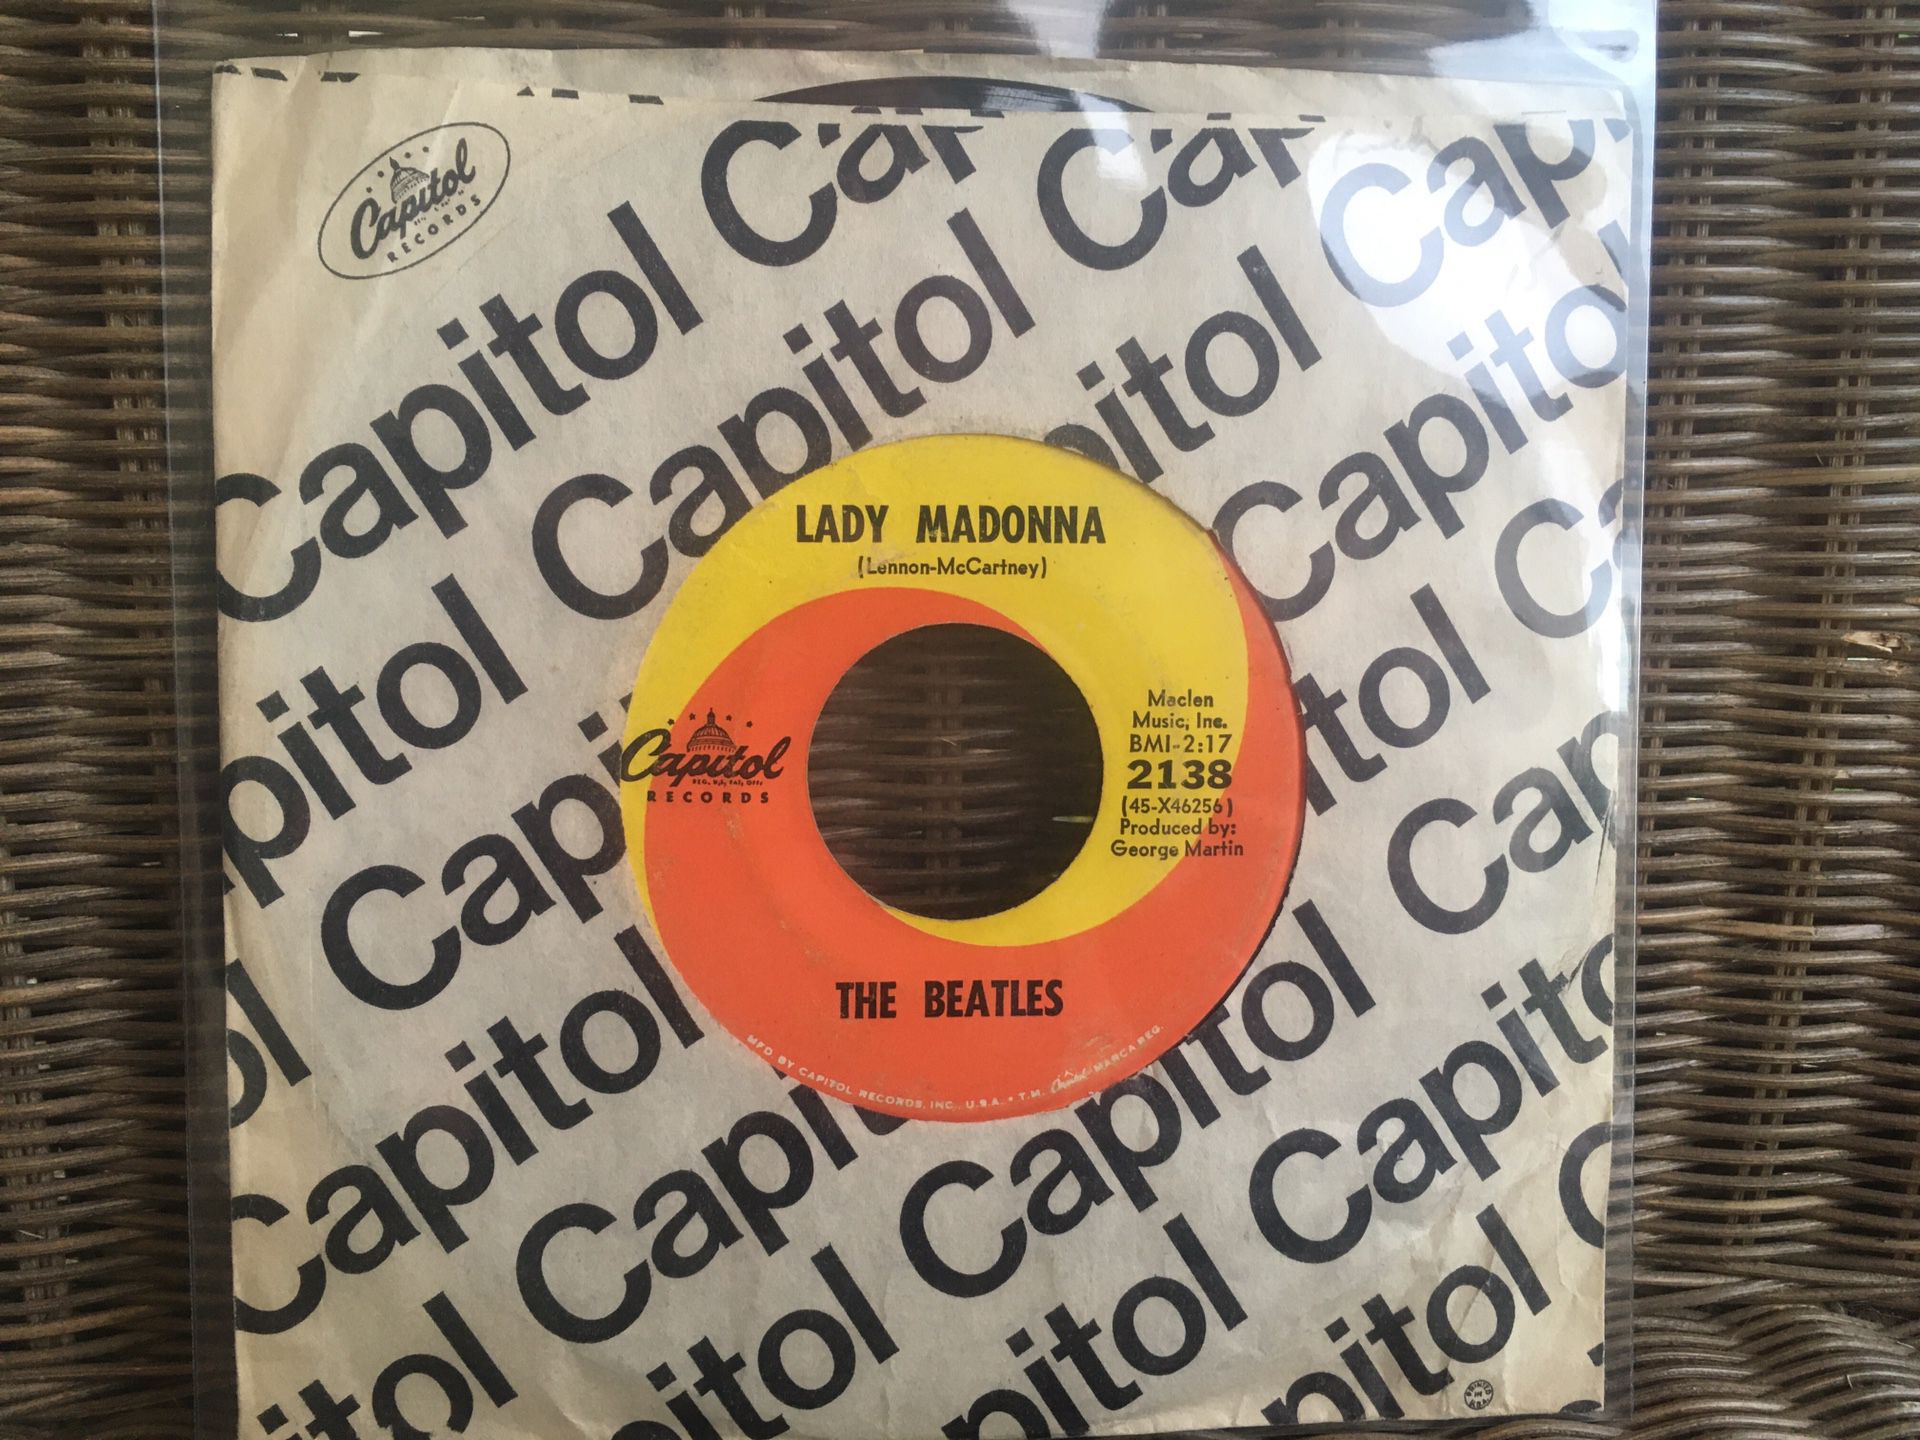 The Beatles “Lady Madonna” 7” Single